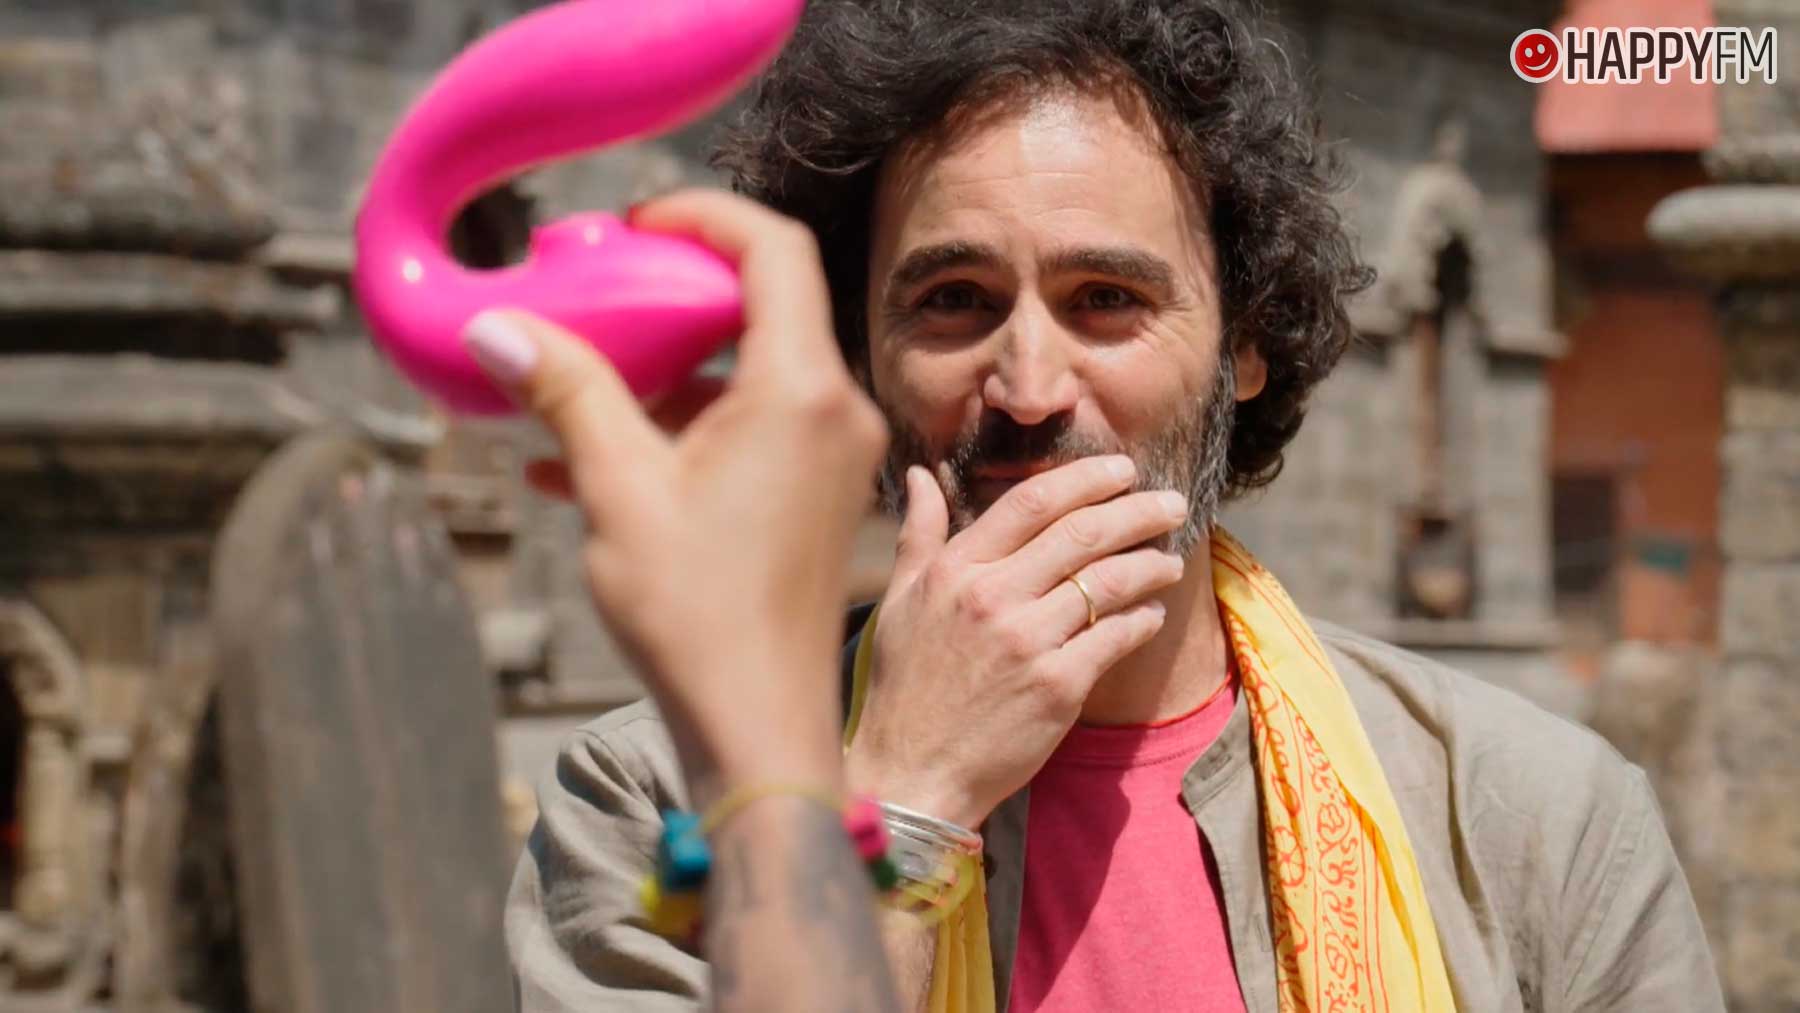 ‘En busca del Nirvana’: Iratxe Soriano sorprende al llevarse juguetes sexuales a Nepal